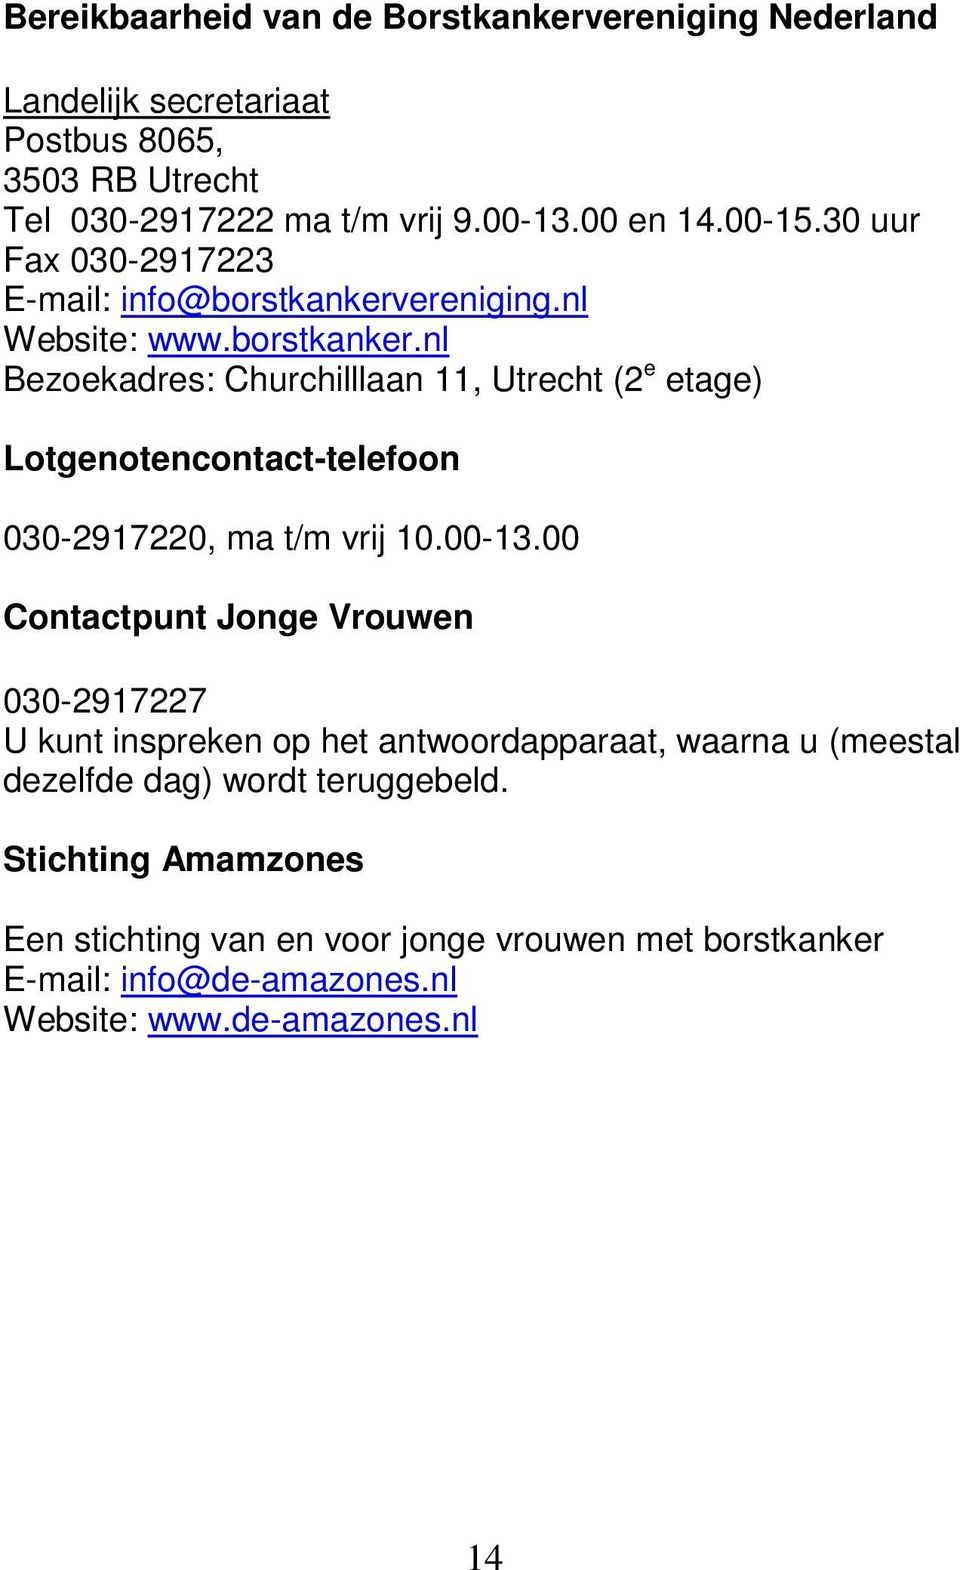 ereniging.nl Website: www.borstkanker.nl Bezoekadres: Churchilllaan 11, Utrecht (2 e etage) Lotgenotencontact-telefoon 030-2917220, ma t/m vrij 10.00-13.